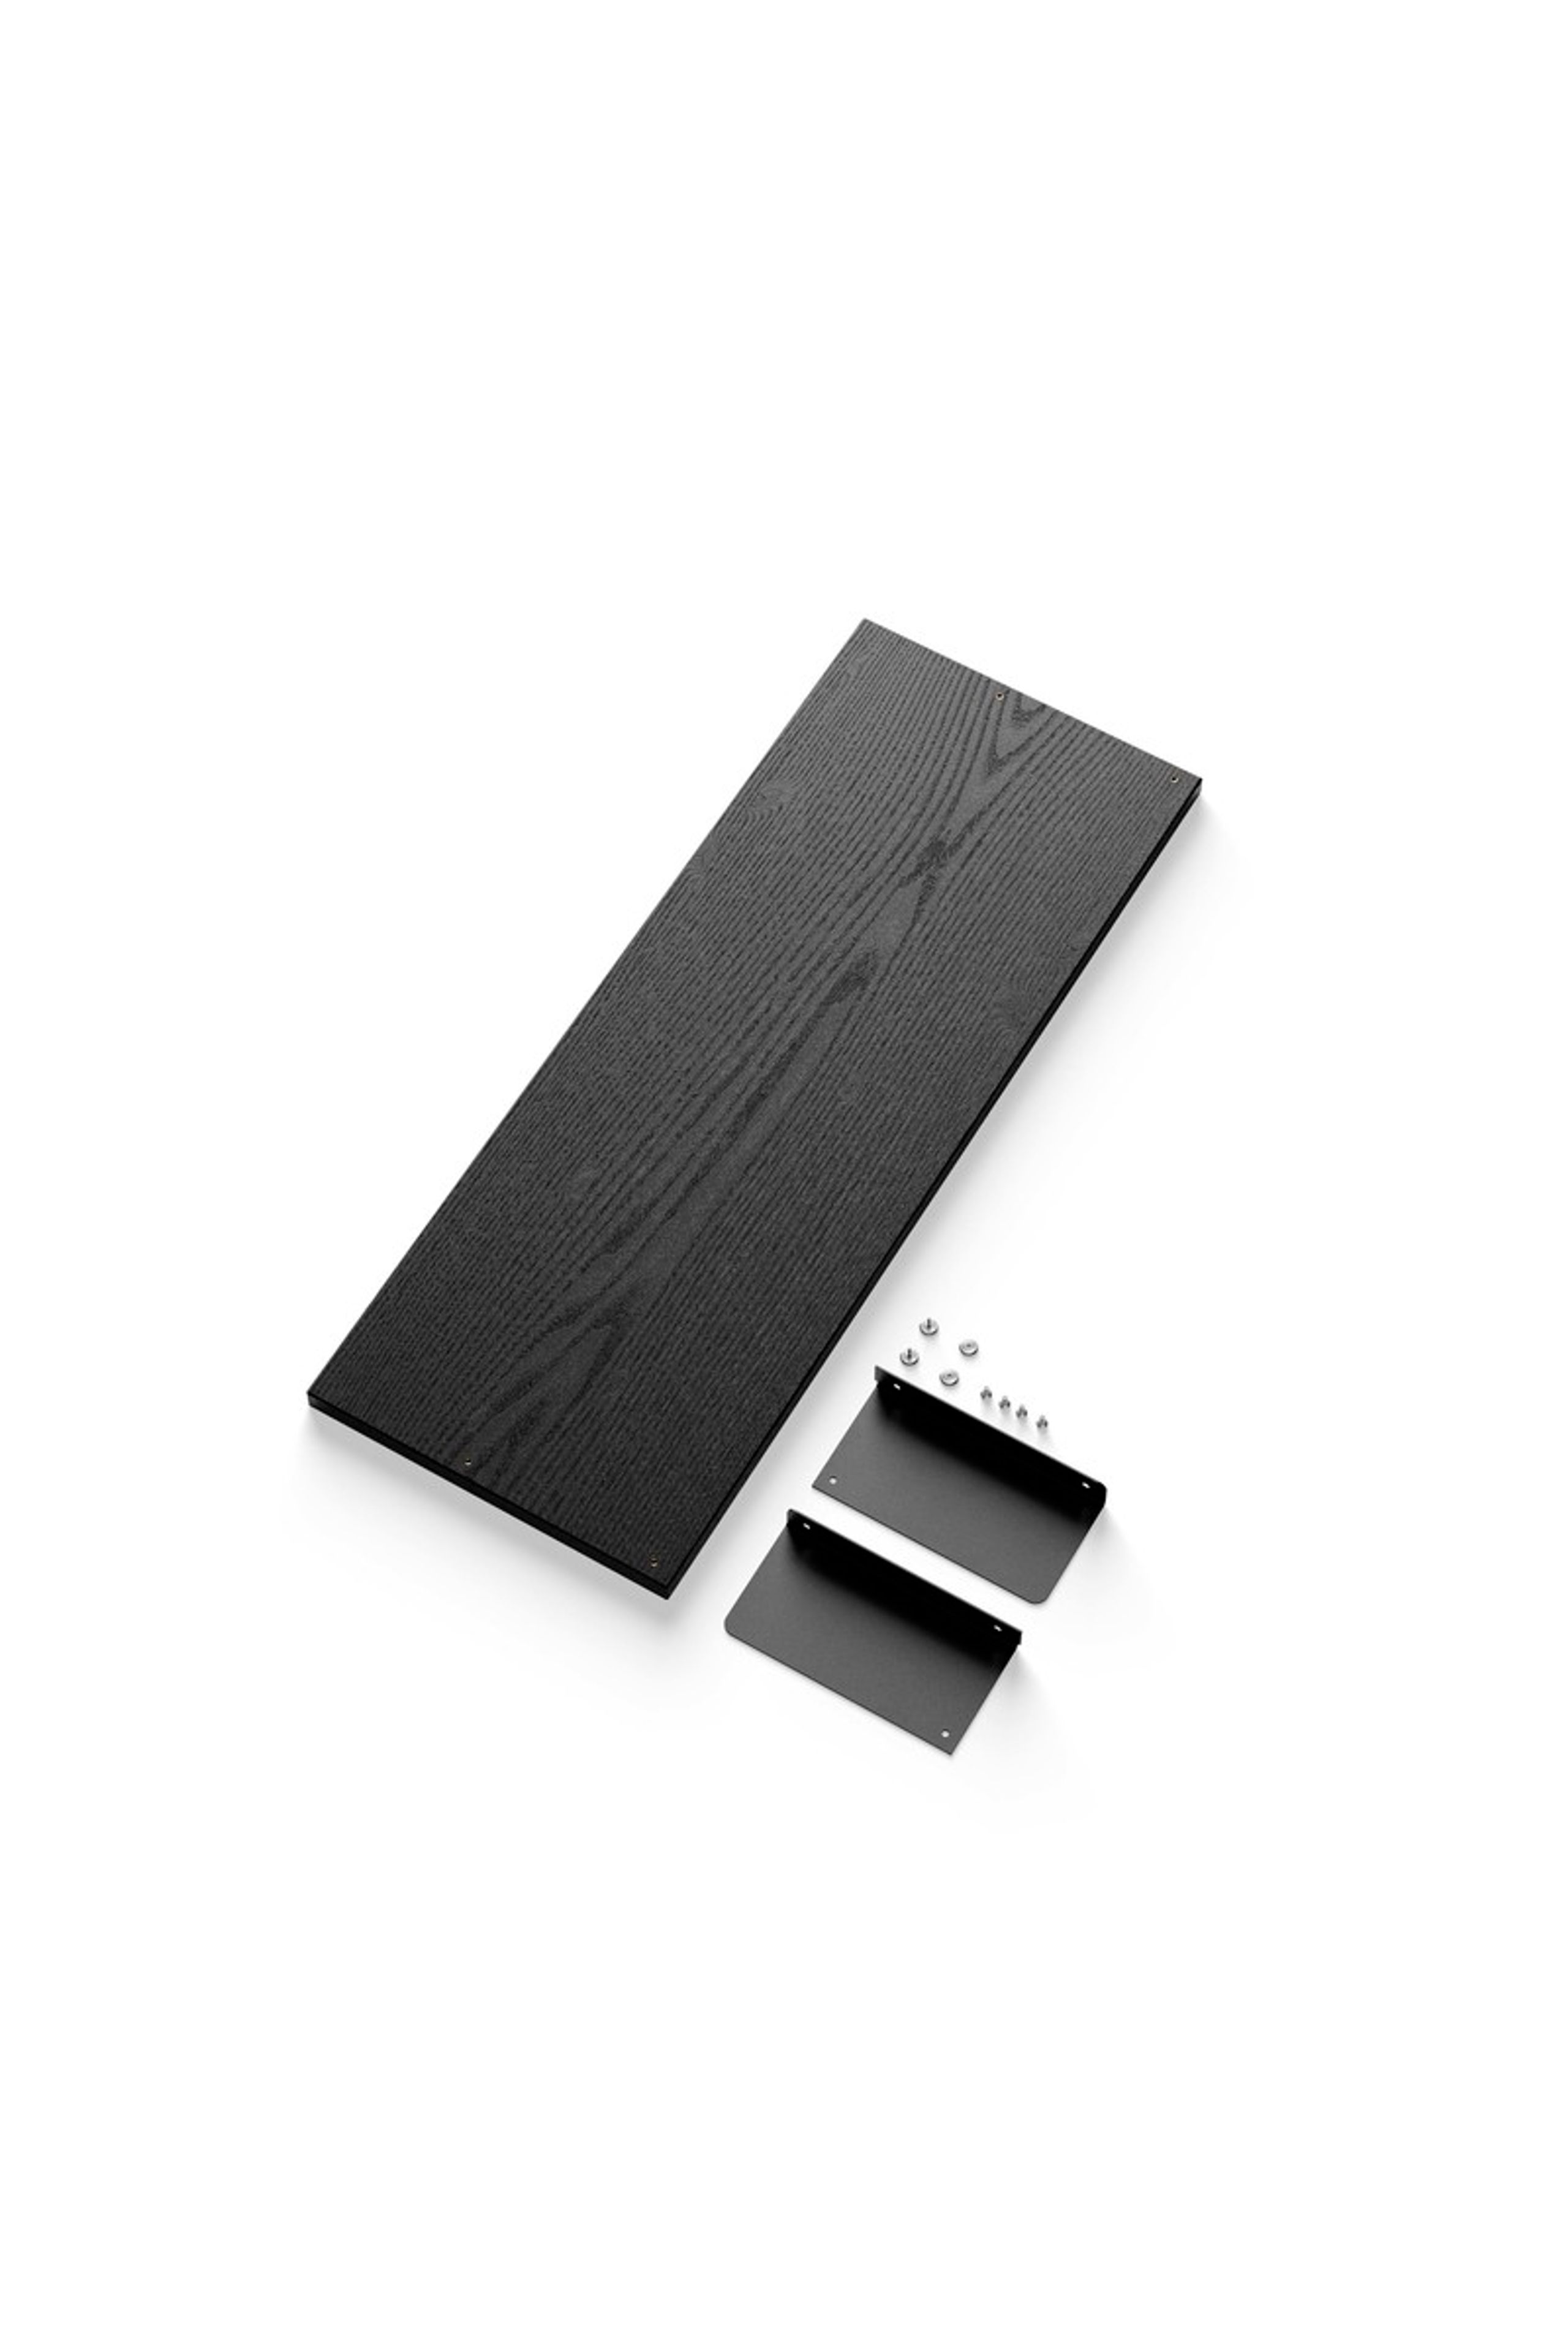 New Works - Plank - NEW WORKS SHELVING SYSTEM - New Works Standard Shelf Kit - Black Ash / Black